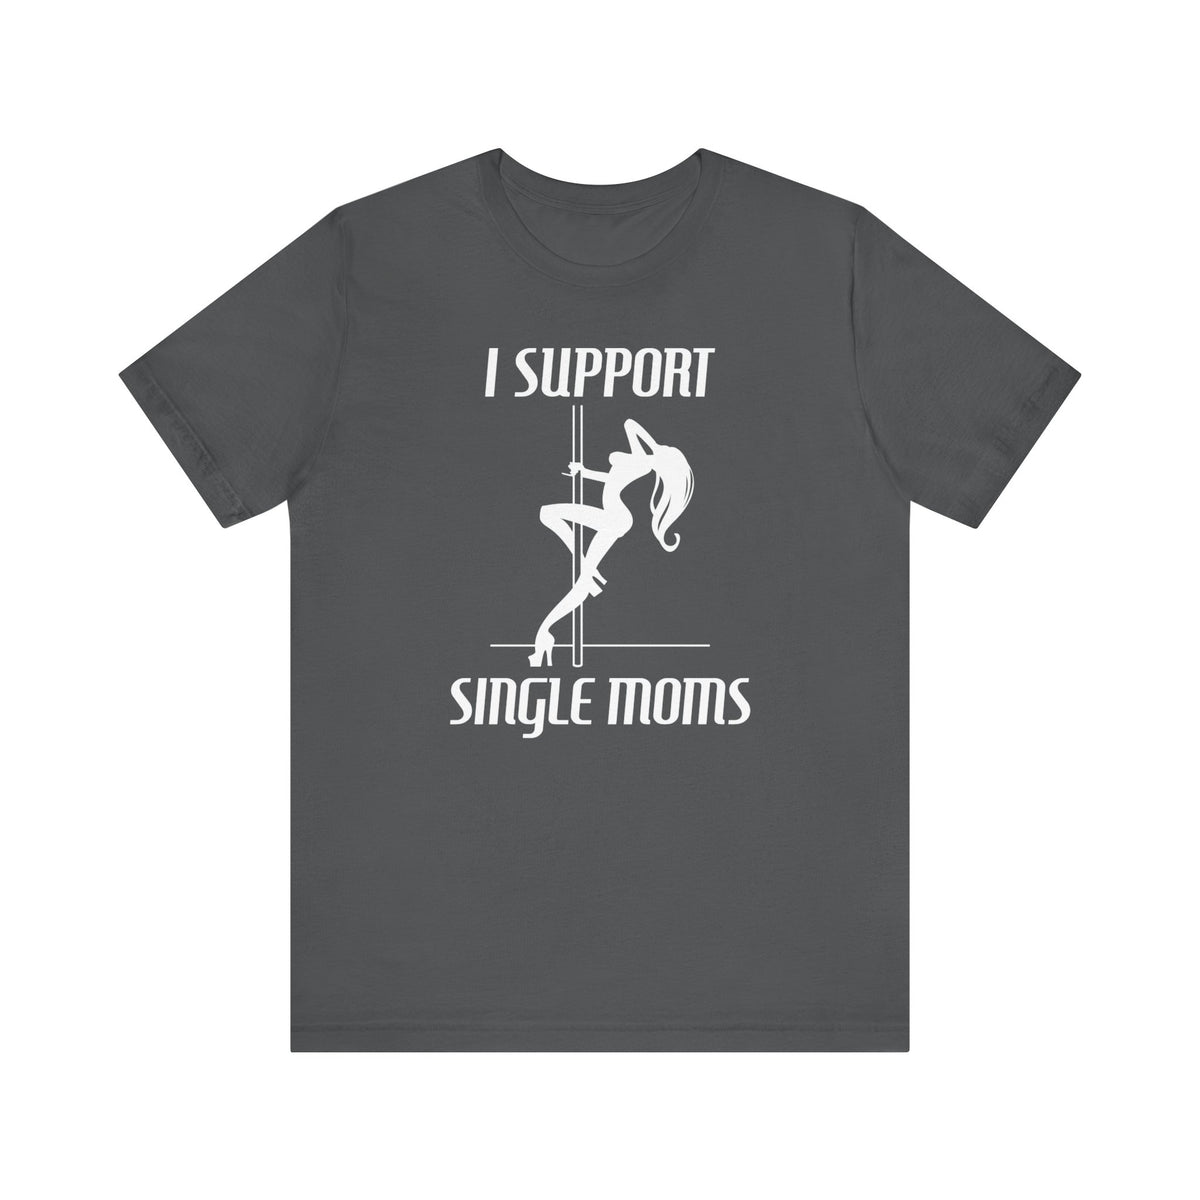 I Support Single Moms - Men's T-Shirt